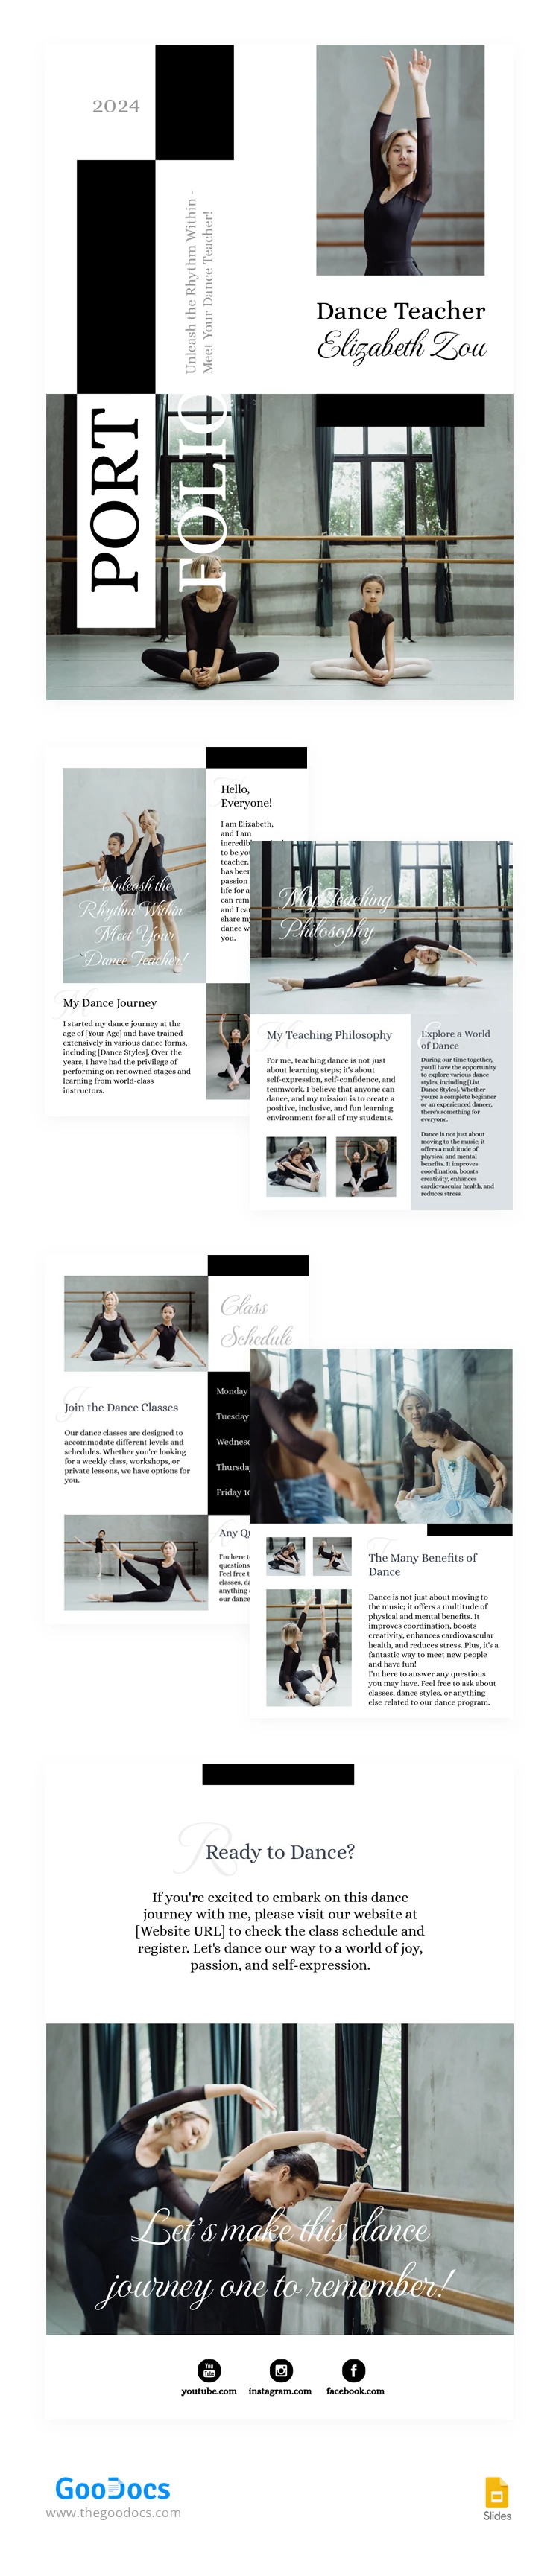 Portfolio Dance Teacher - free Google Docs Template - 10067368